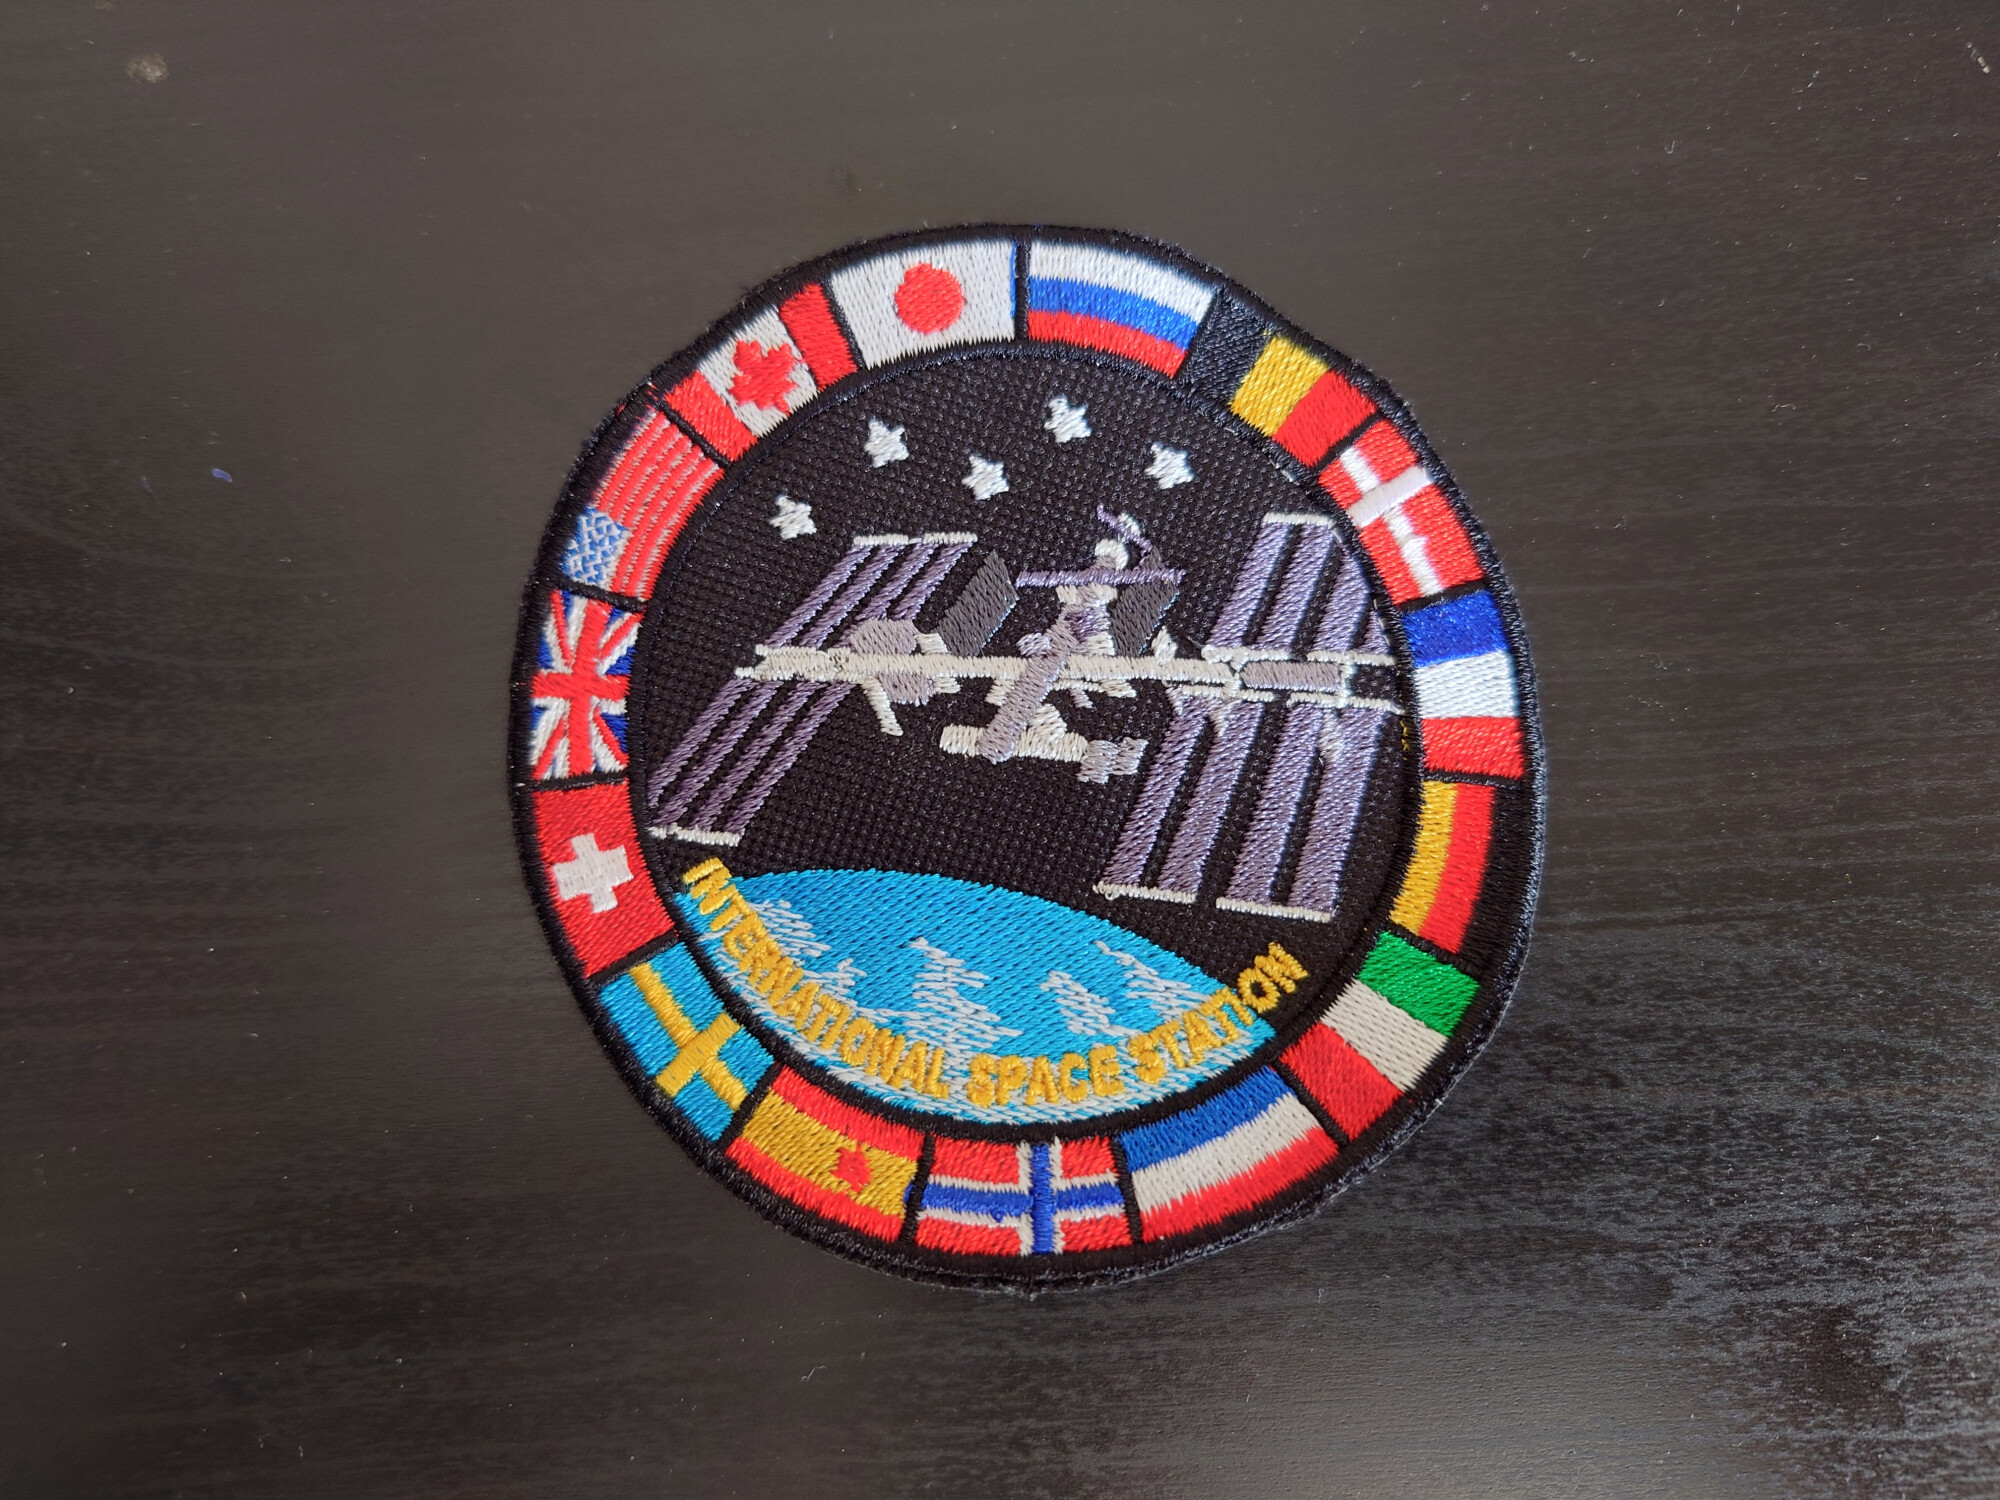  International Space Station ()